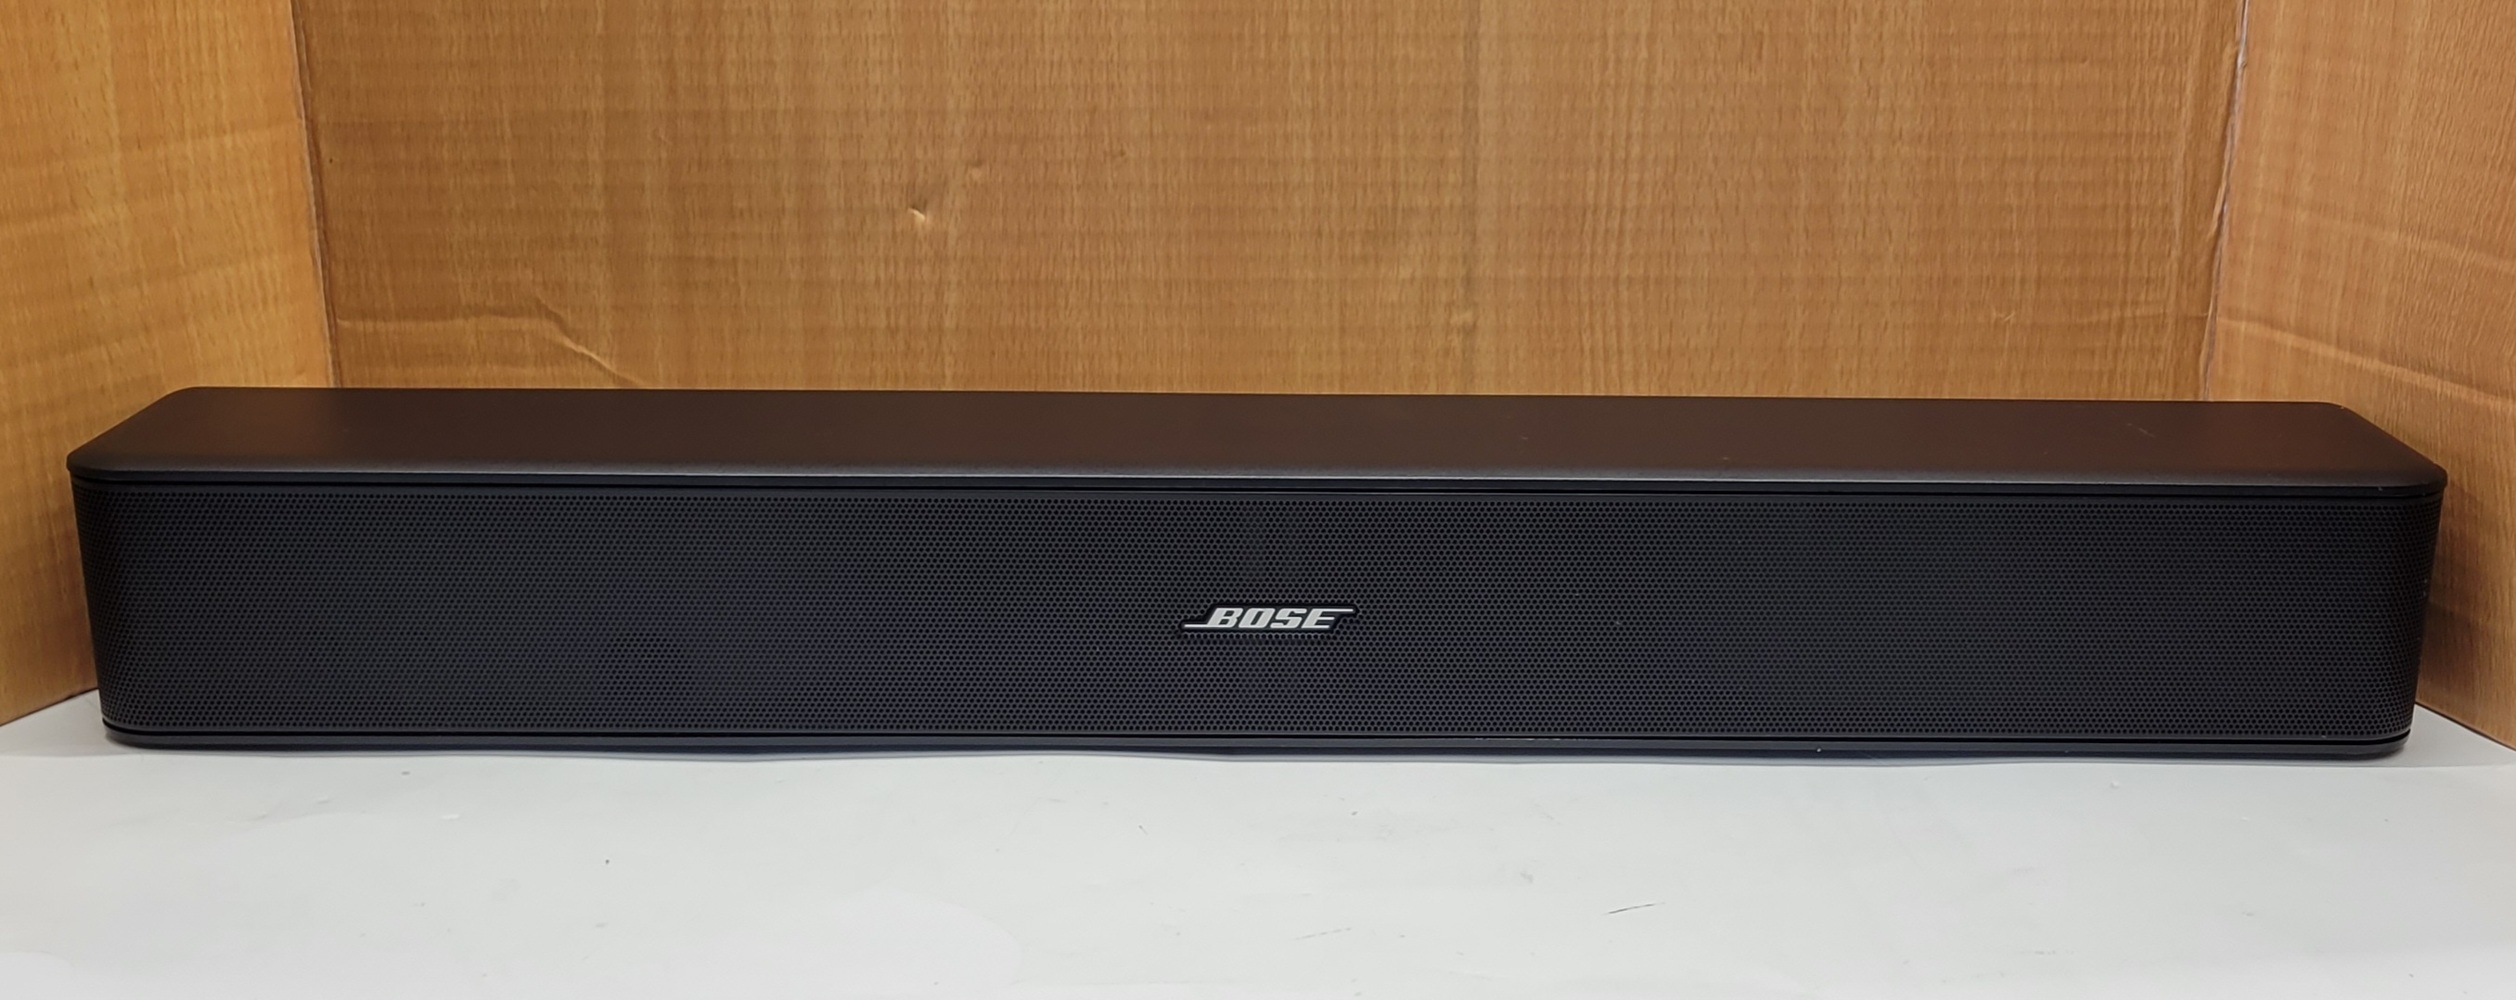 Bose Solo 5 T.V. Sound System Model 418775